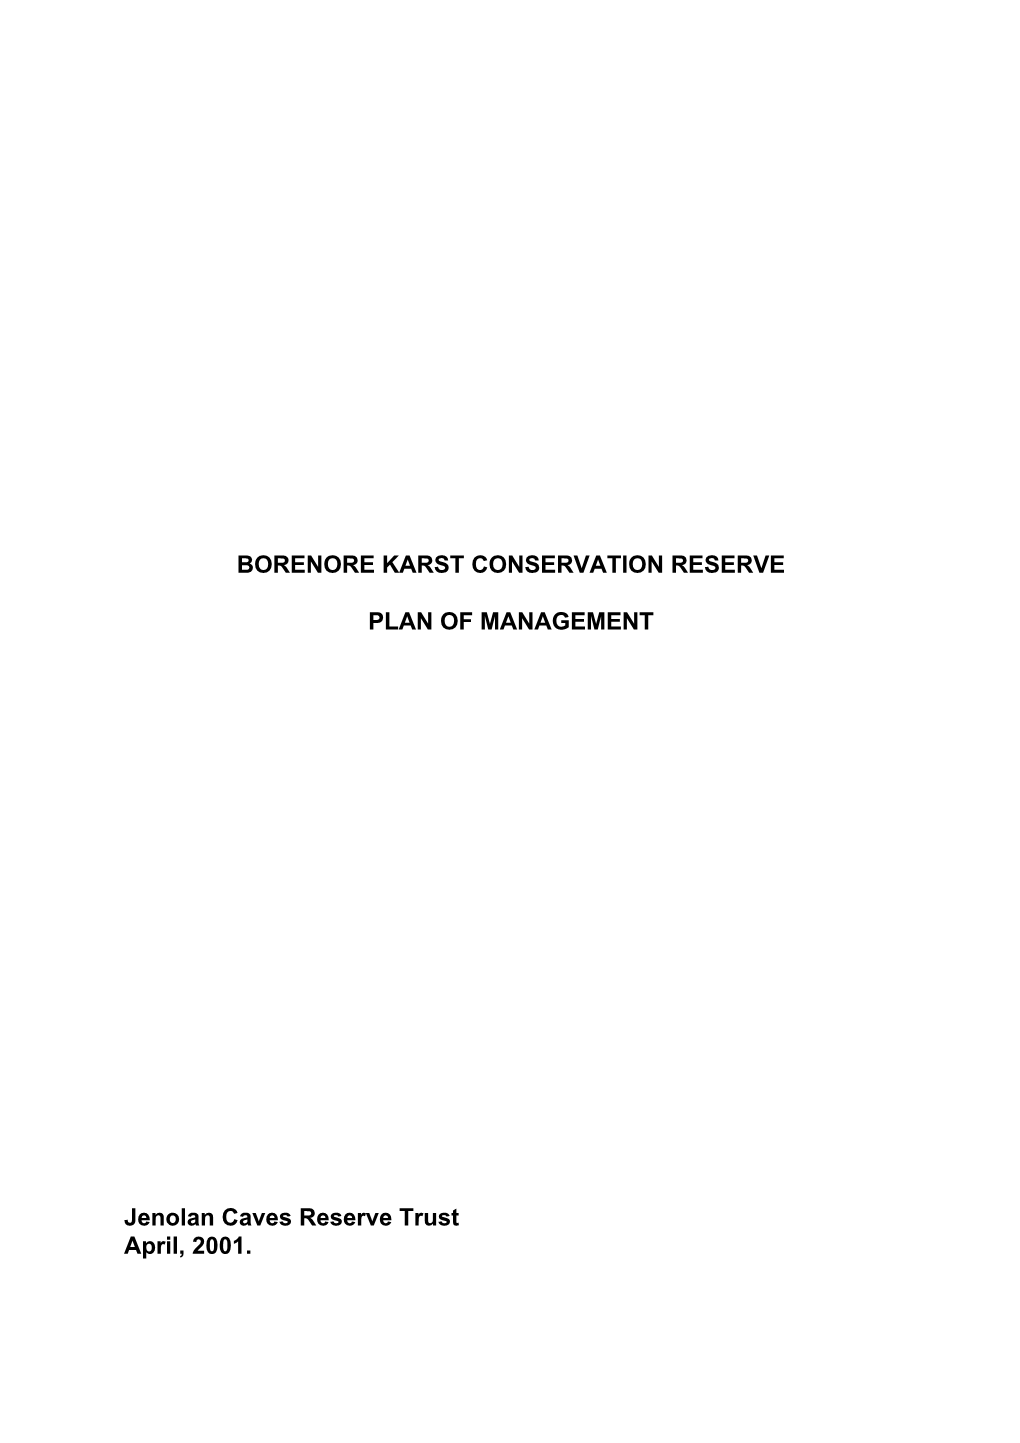 Borenore Karst Conservation Reserve